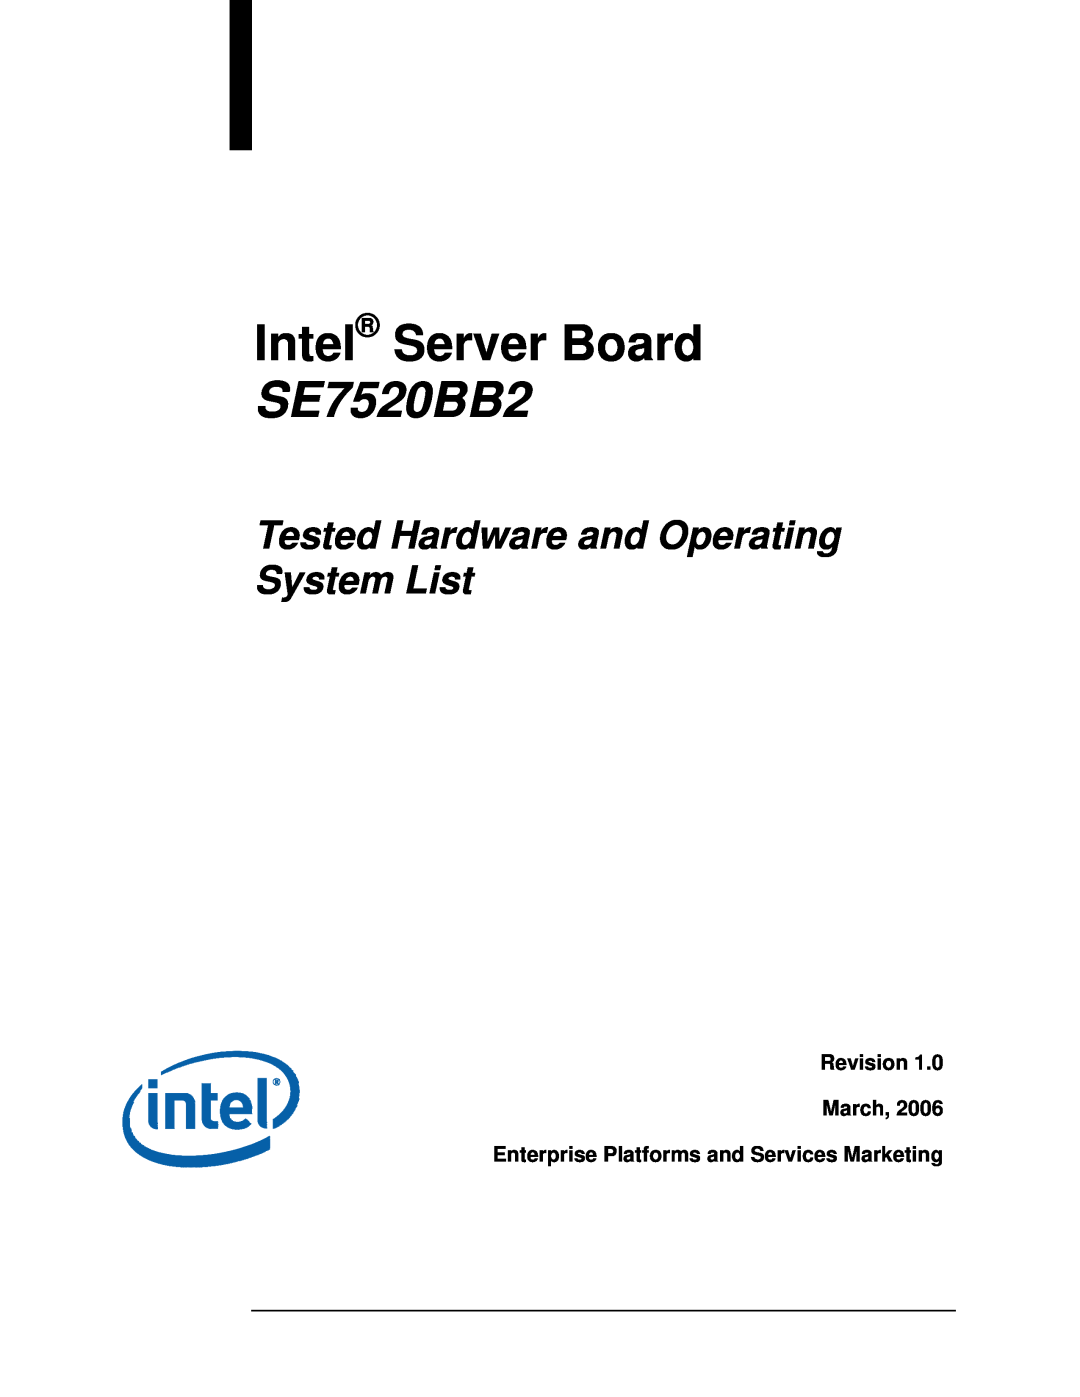 Intel SE7520BB2 manual Revision March, Enterprise Platforms and Services Marketing, Intel Server Board 